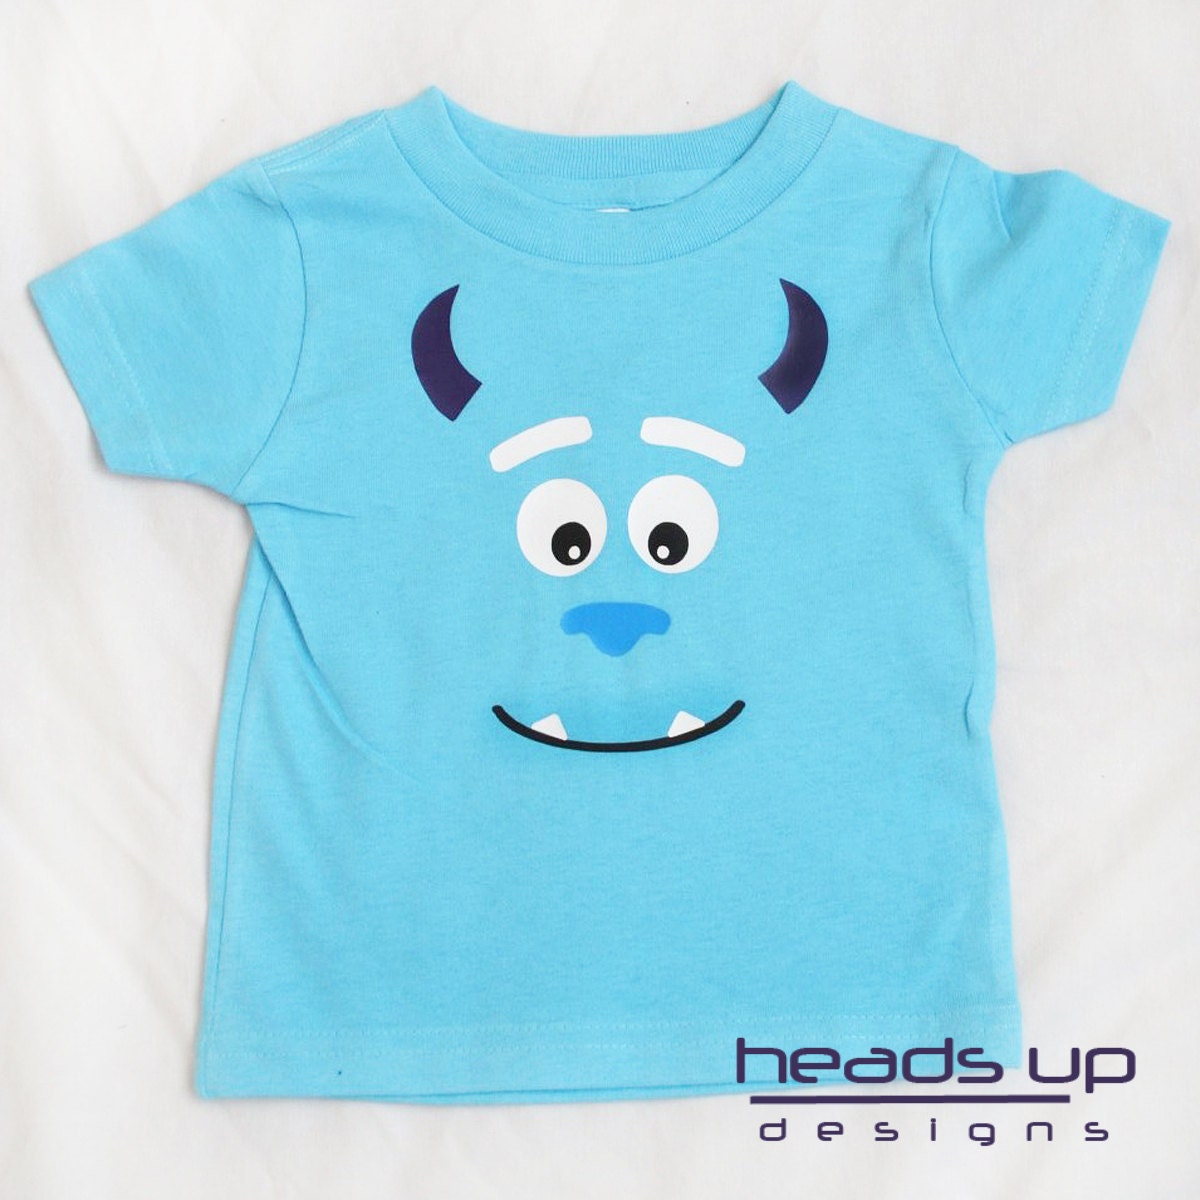 Sulley tshirt - Monsters Inc t shirt Toddler - Toddler Sulley t-shirt - Monster Shirt Boy - Kids Monster Inc Shirt - Tee Shirt - Costume -